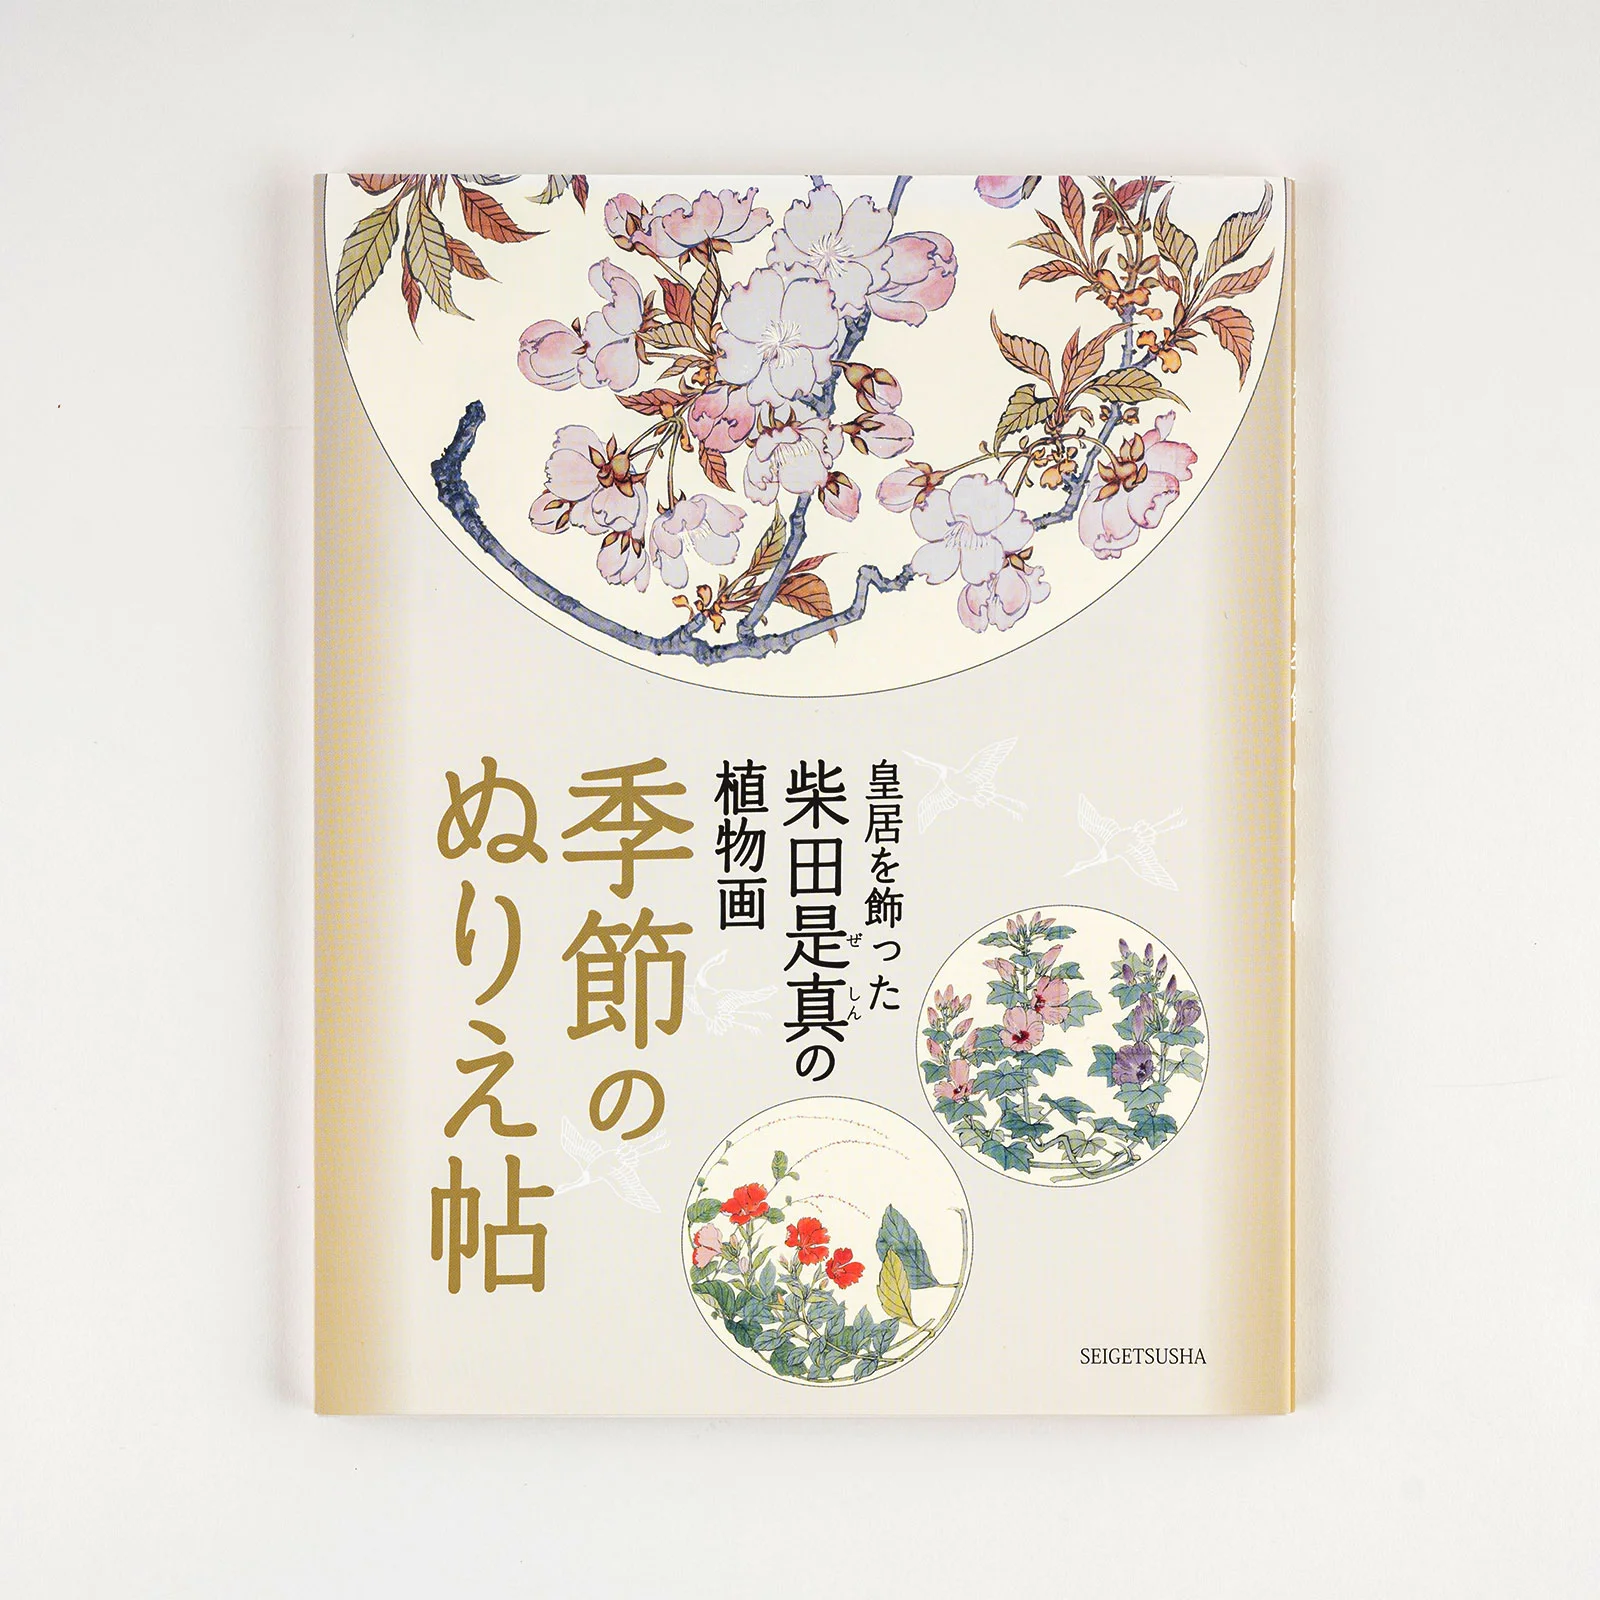 Seasonal Coloring Book of Shibata Zeshin - Accessories Lineup 